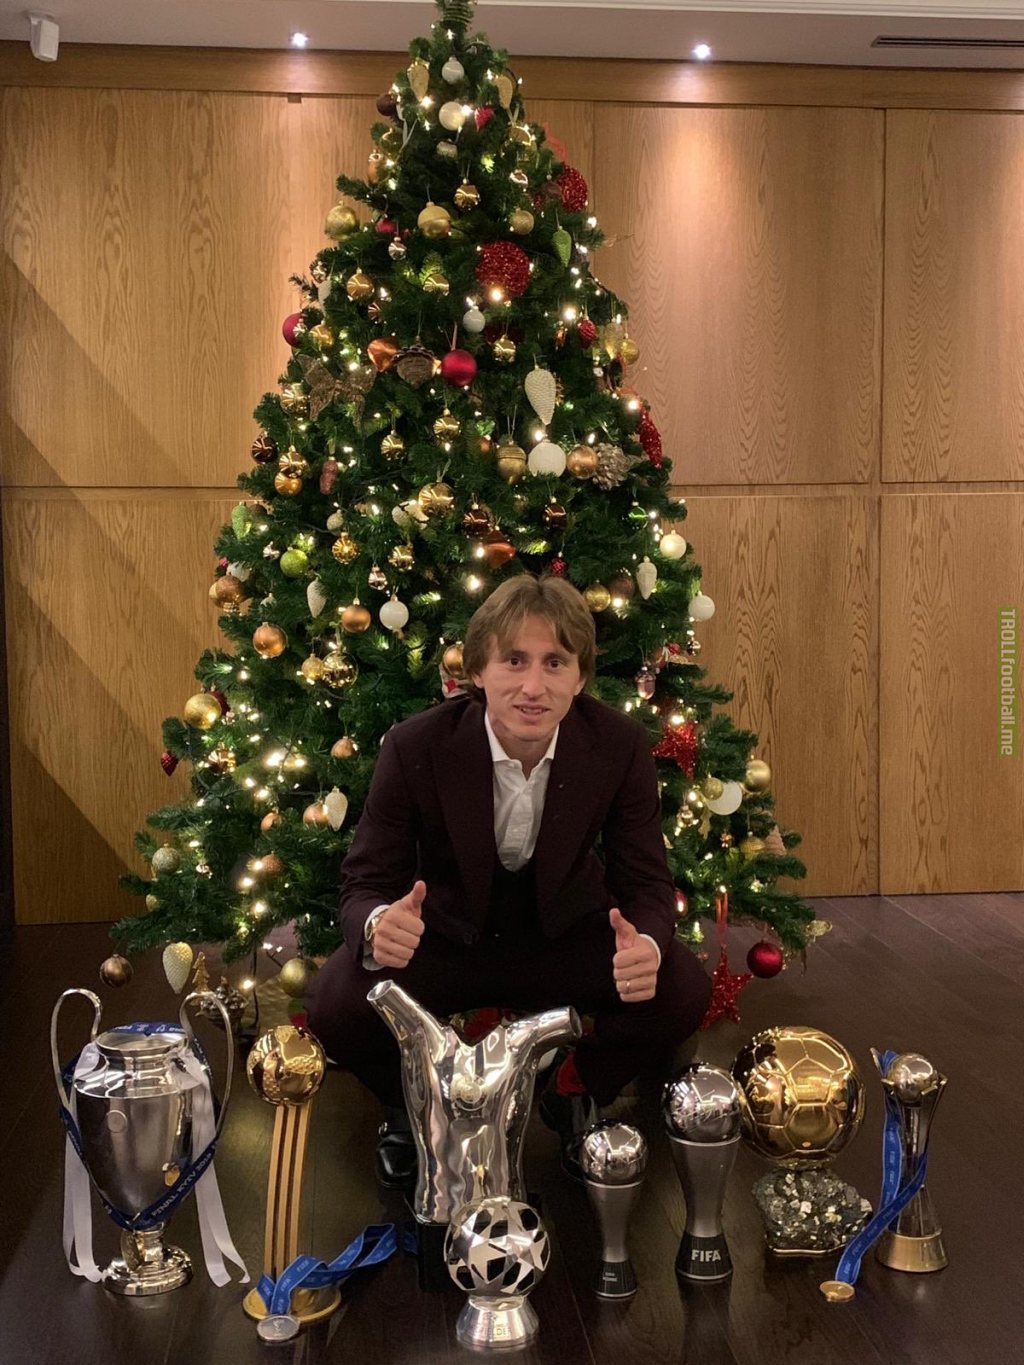 Pretty decent year for Modric